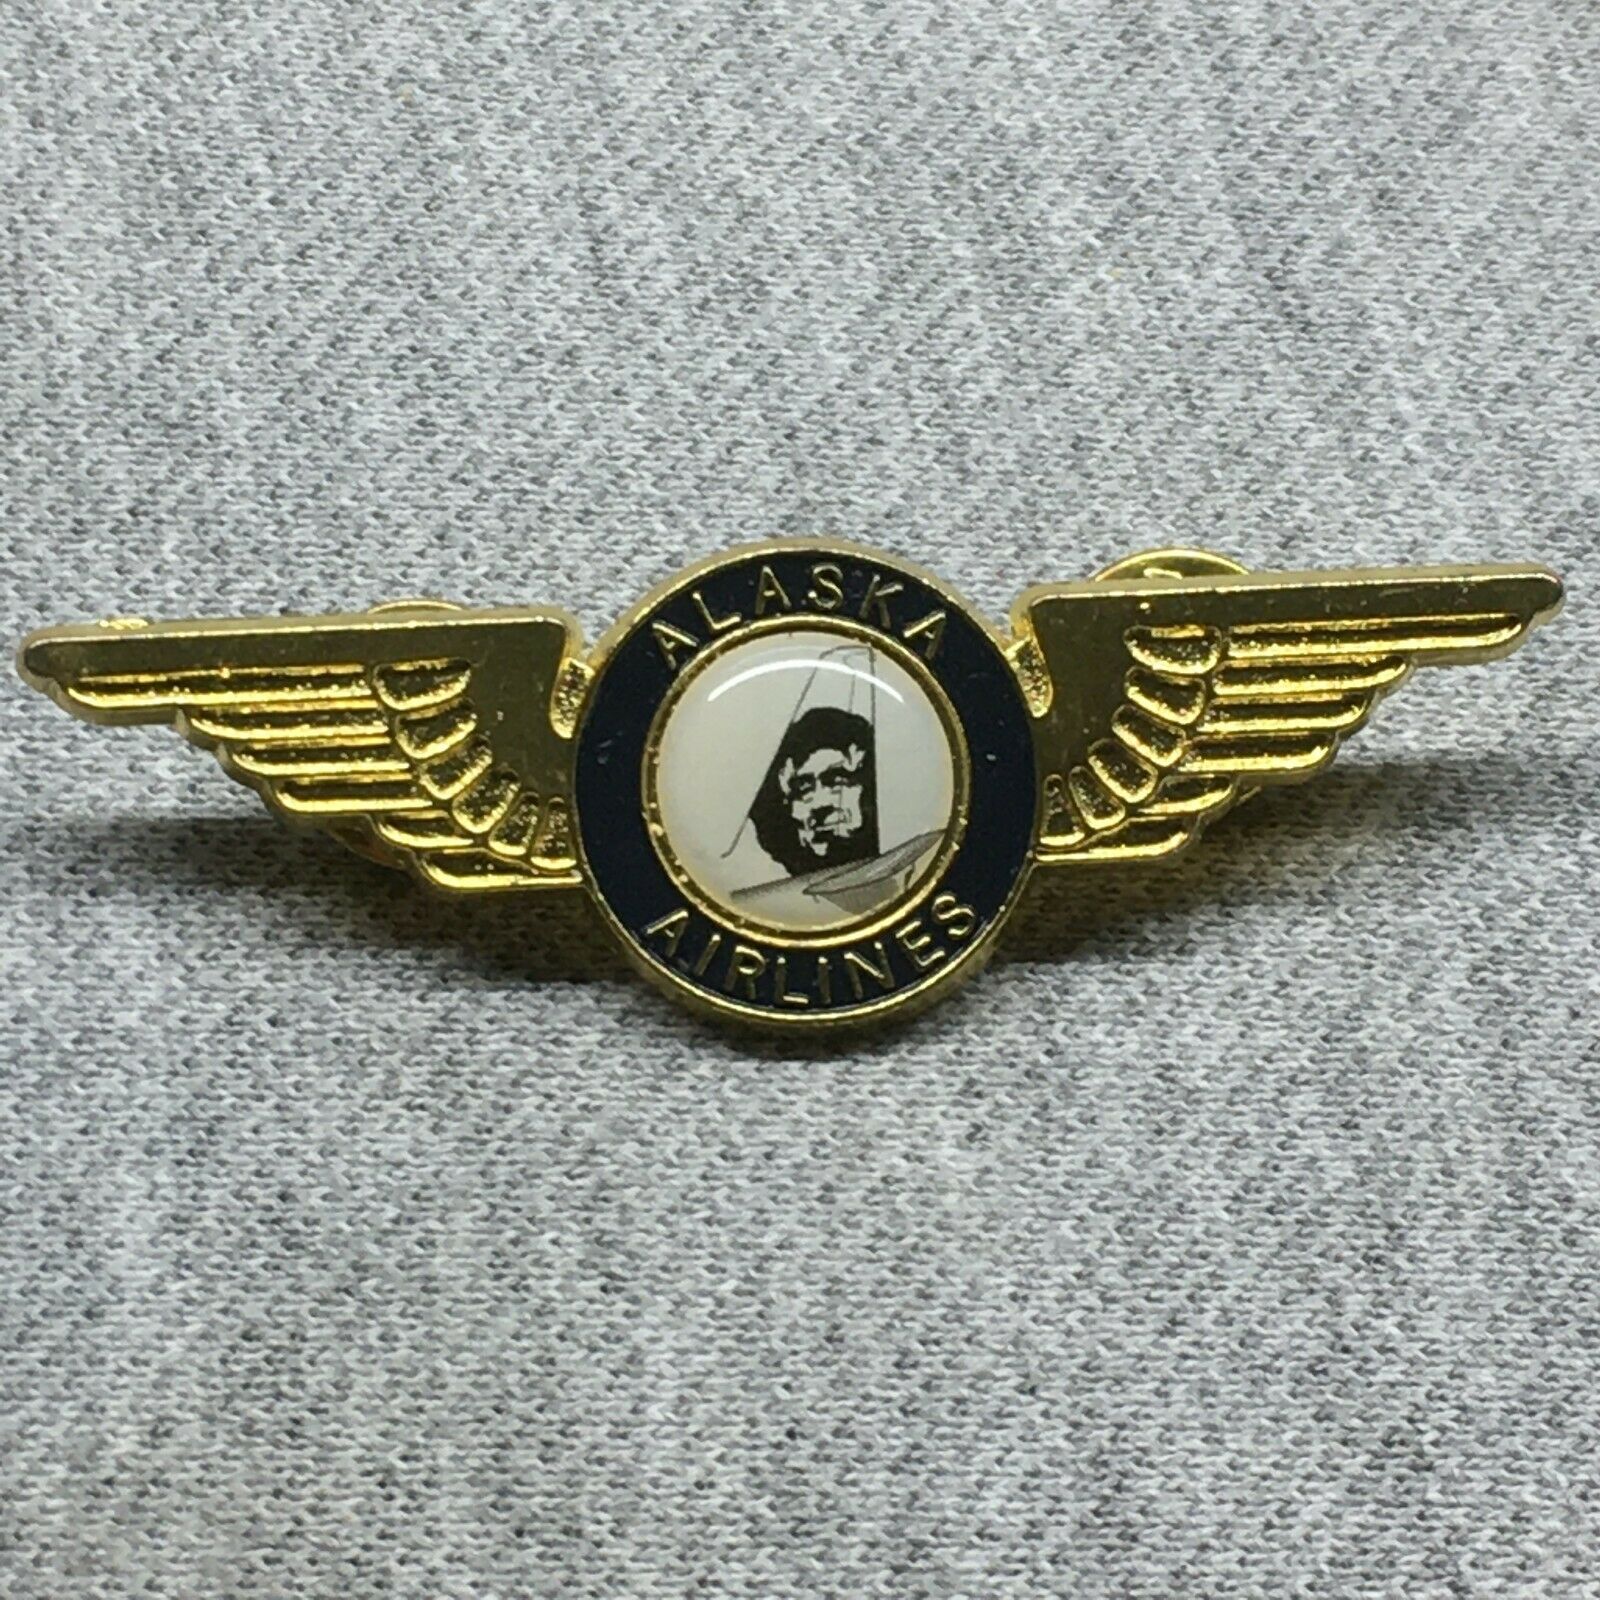 Alaska Airlines Pin Hat Tie Lapel Pinback Collectible Souvenir